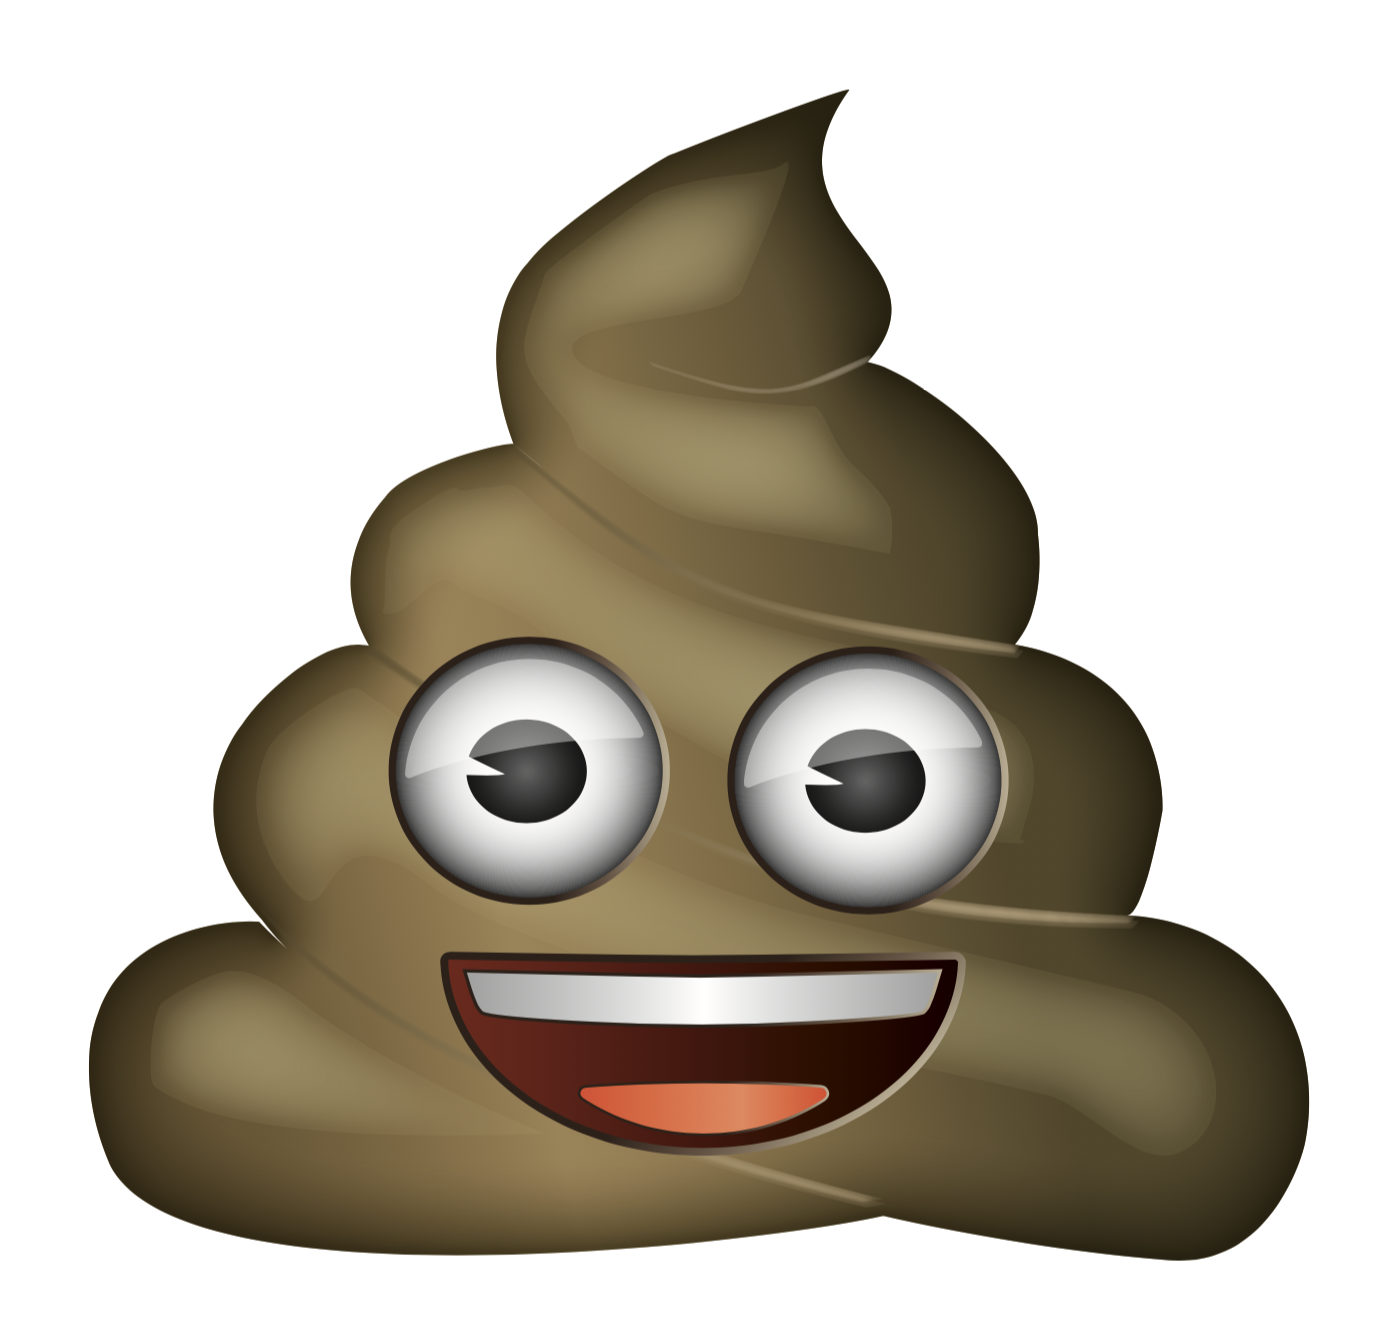 What Does The Poop Emoji Really Mean?